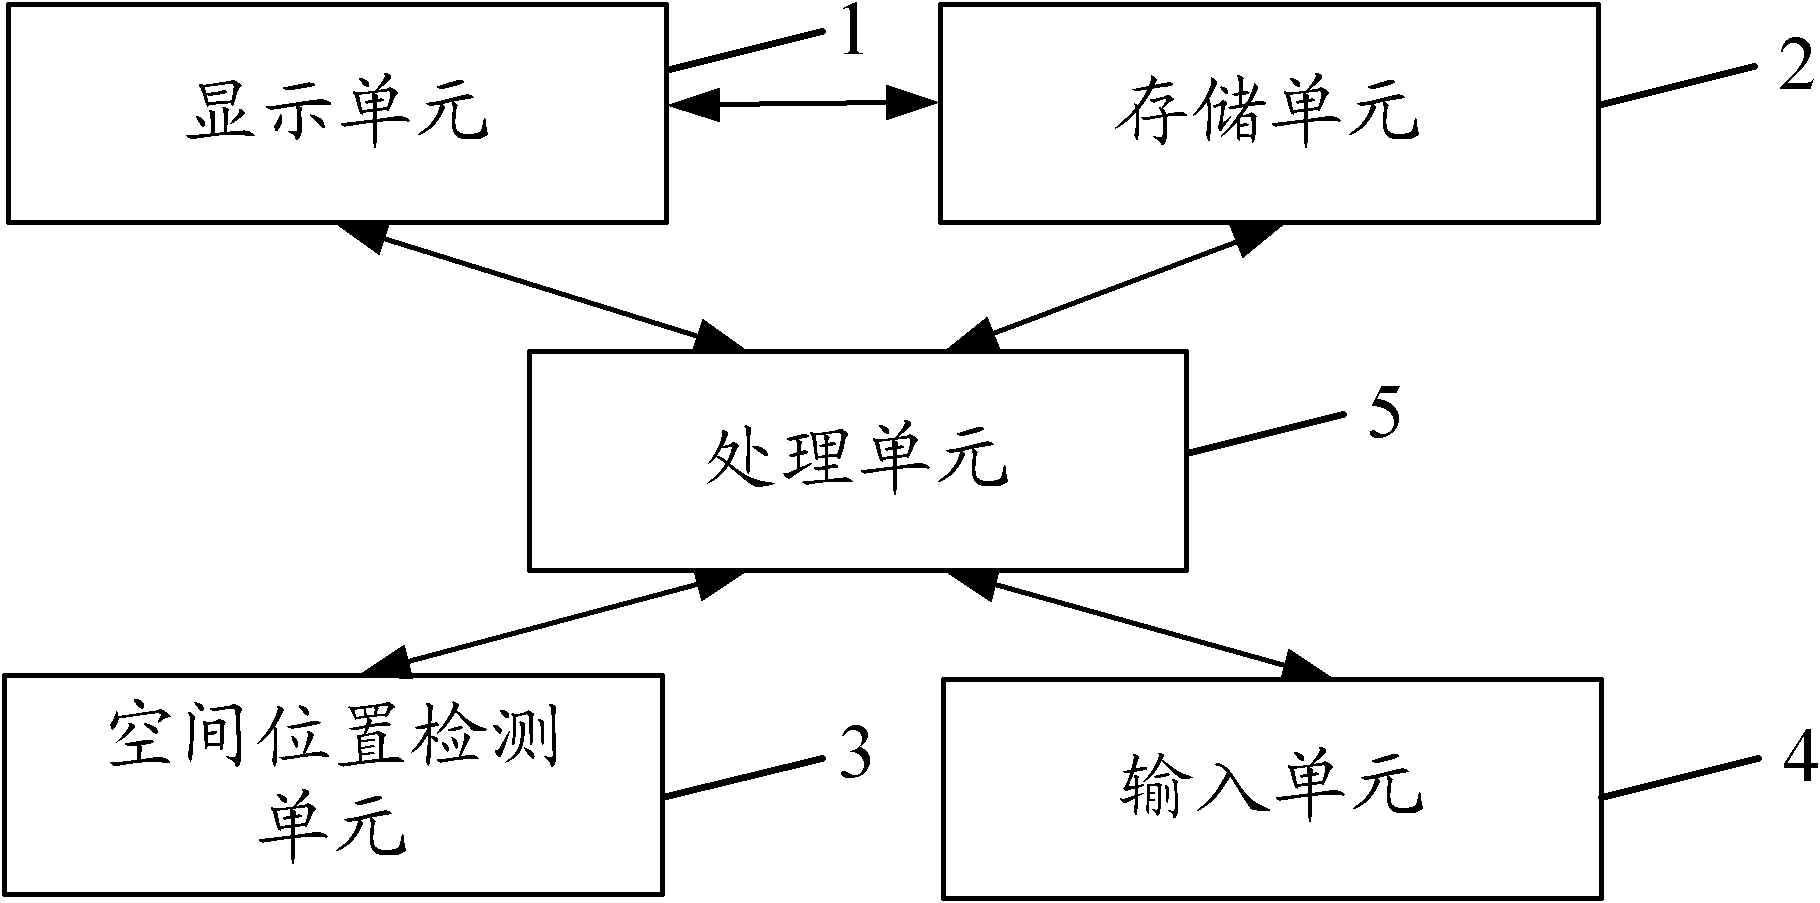 Display method and terminal